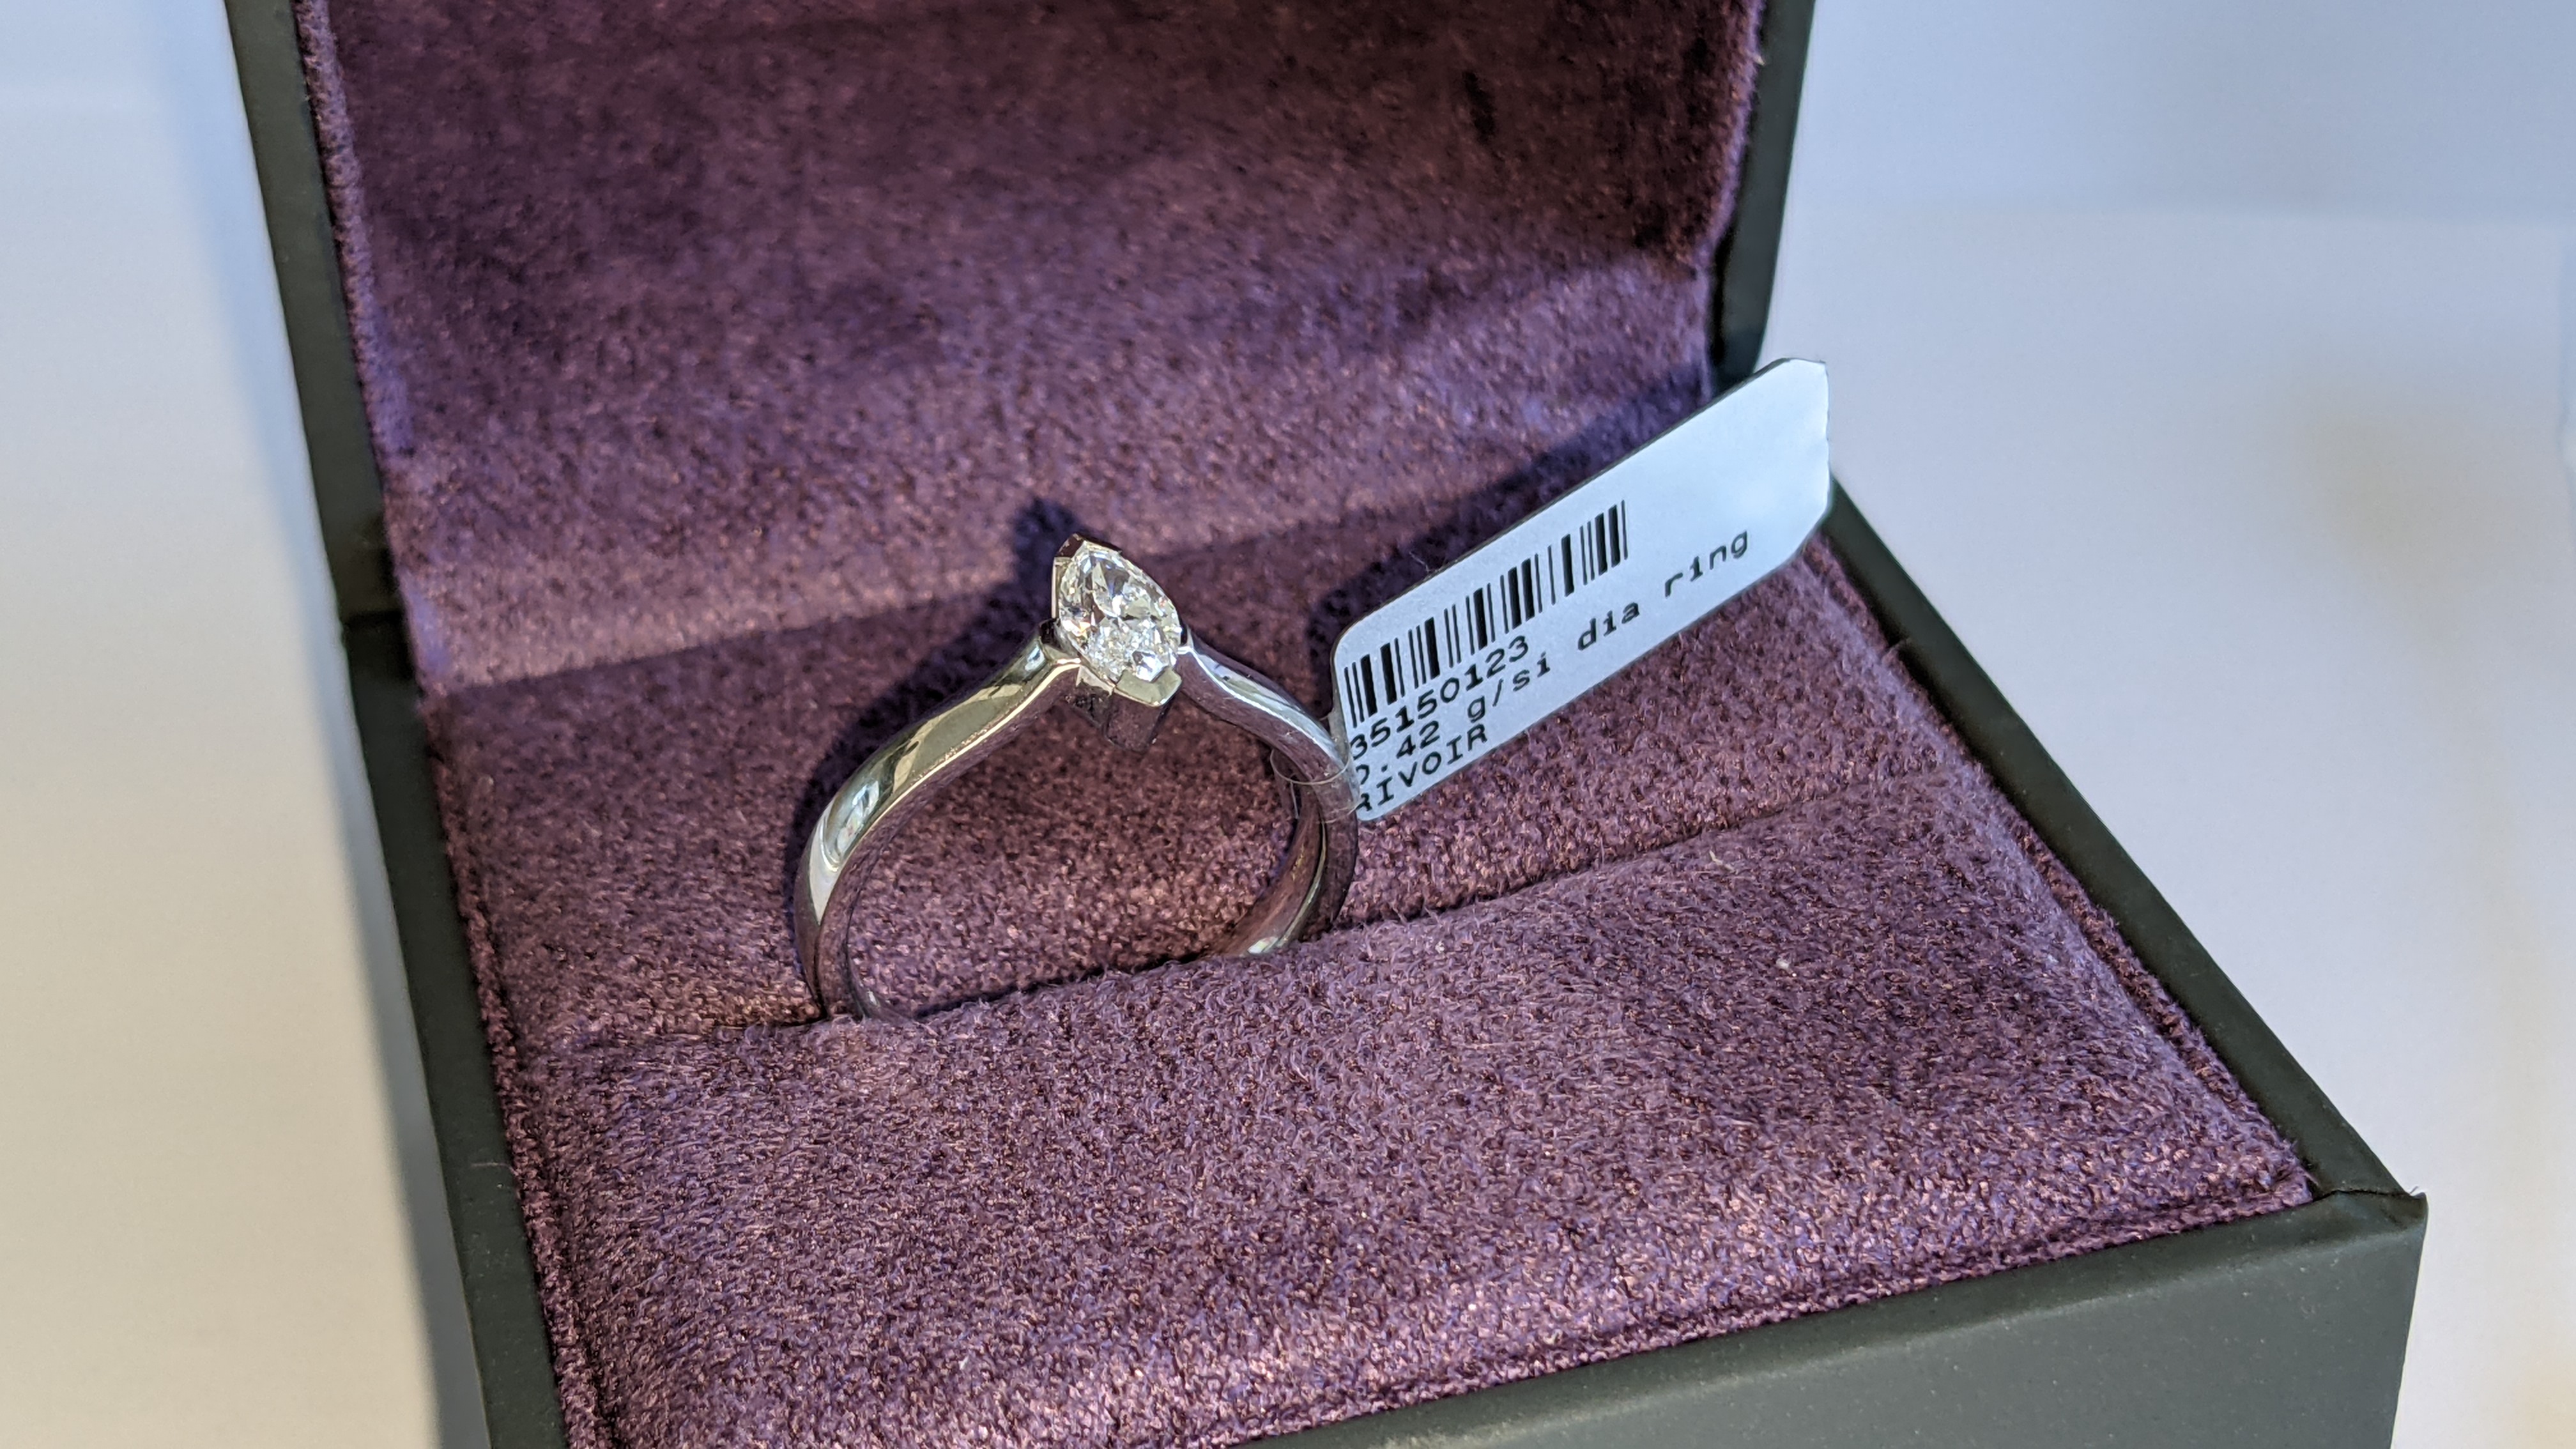 18ct white gold & diamond ring with 0.42ct diamond. RRP £2,875